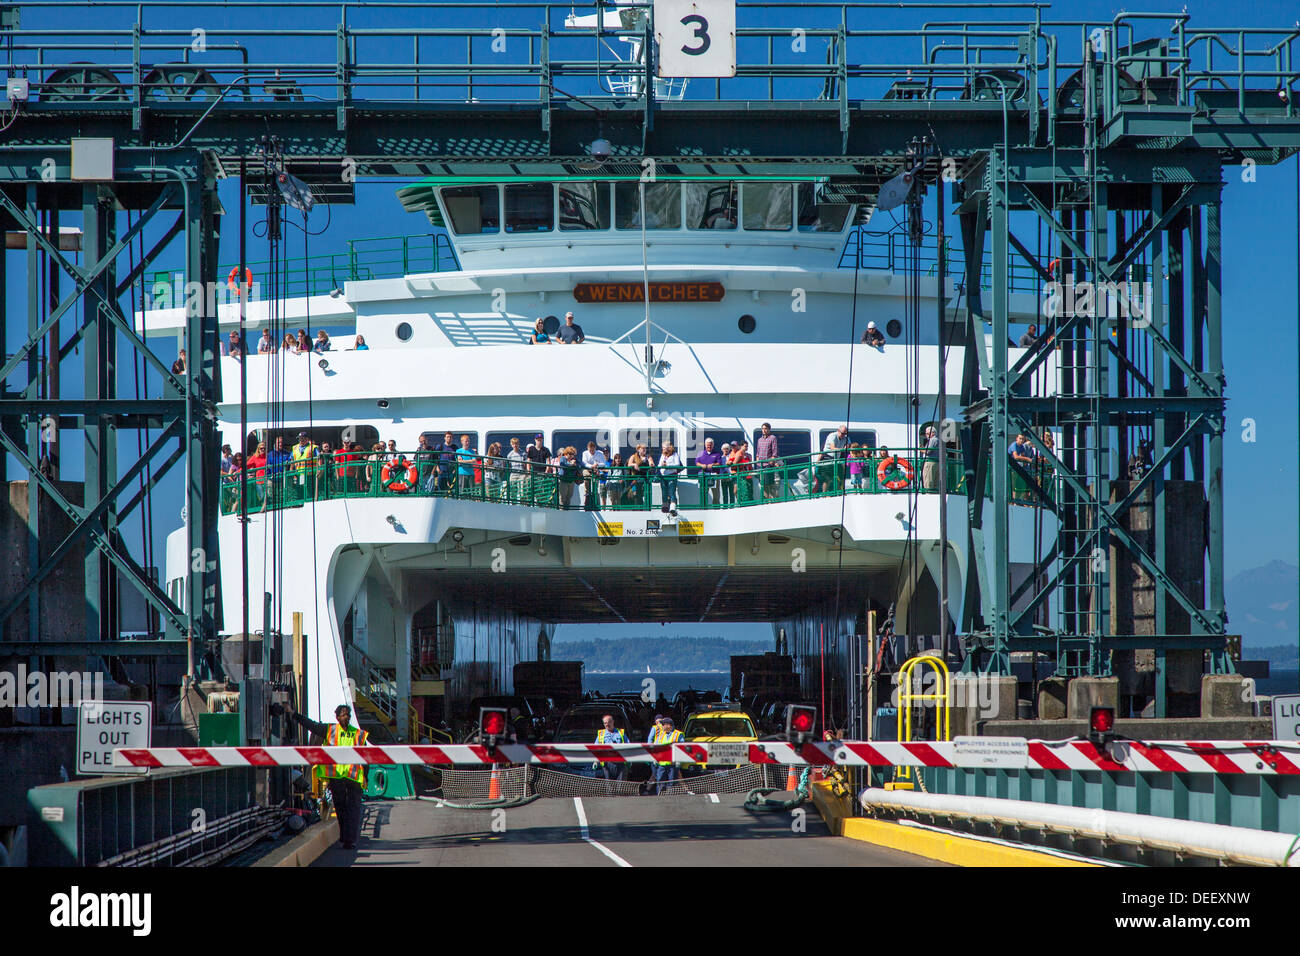 Bainbridge Island Ferry Boat arriving at the Seattle Dock, Seattle Washington, USA Stock Photo